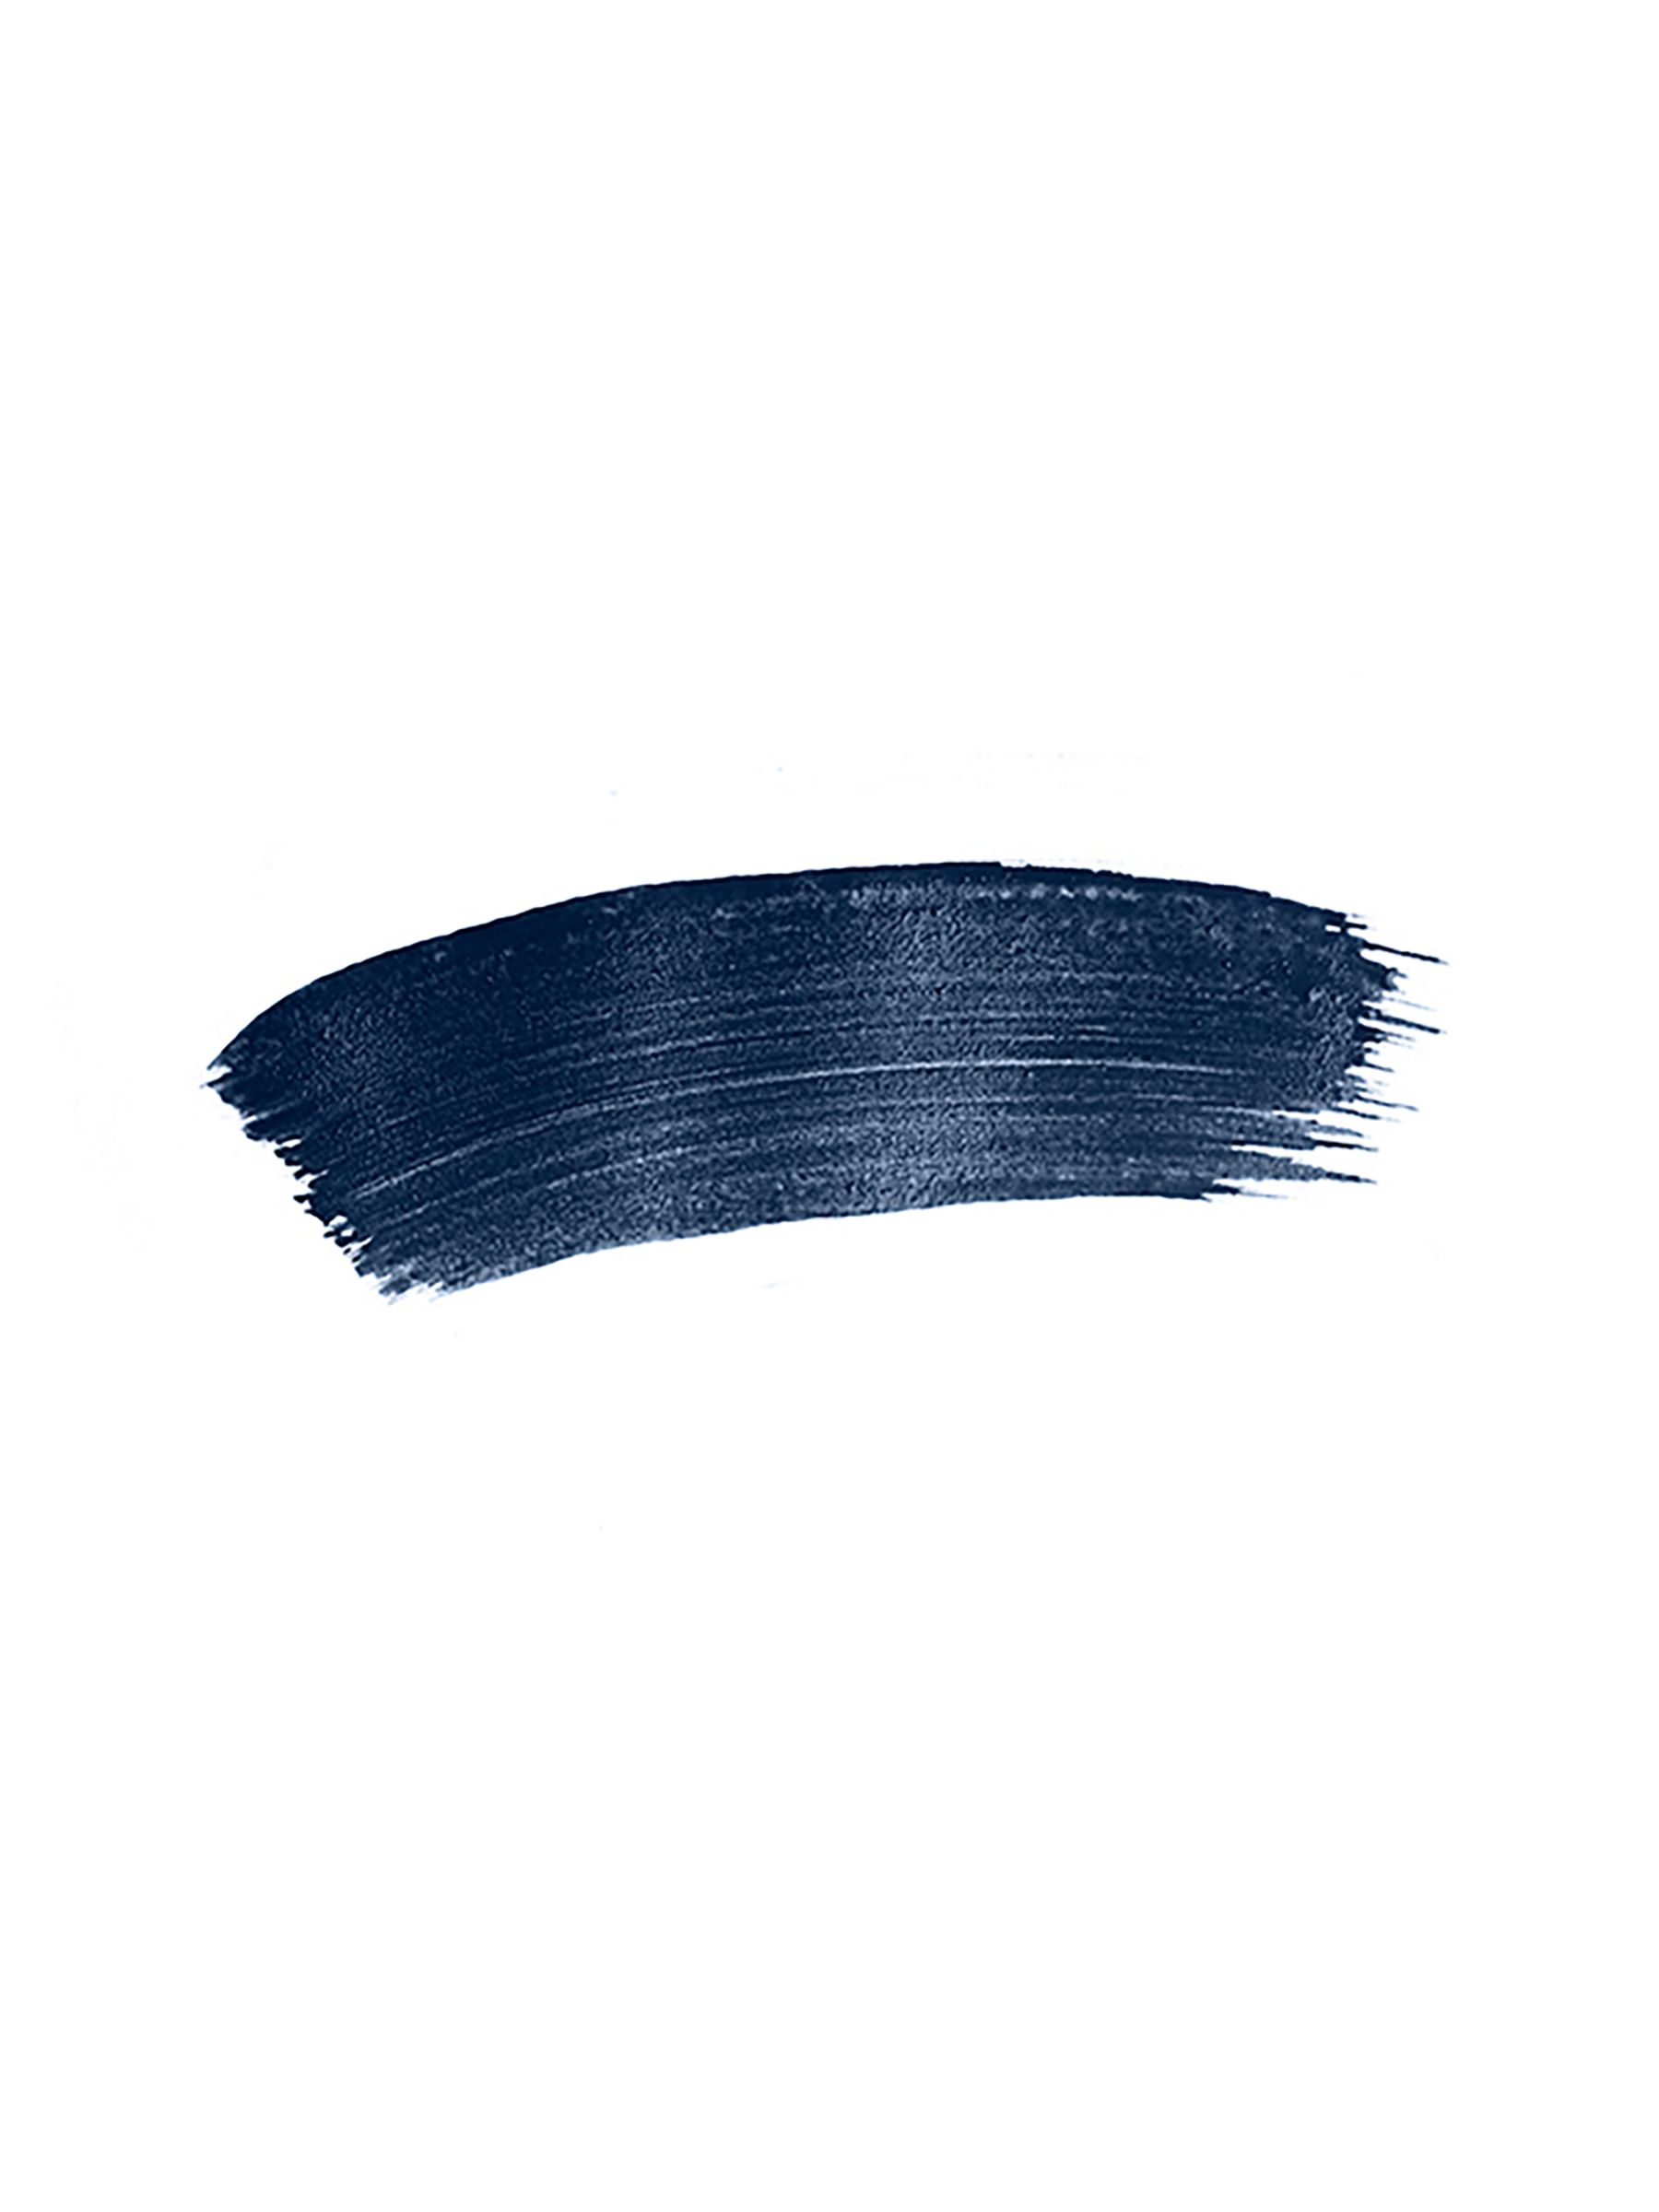 Sisley-Paris So Curl Mascara, 01 Deep Blue 2